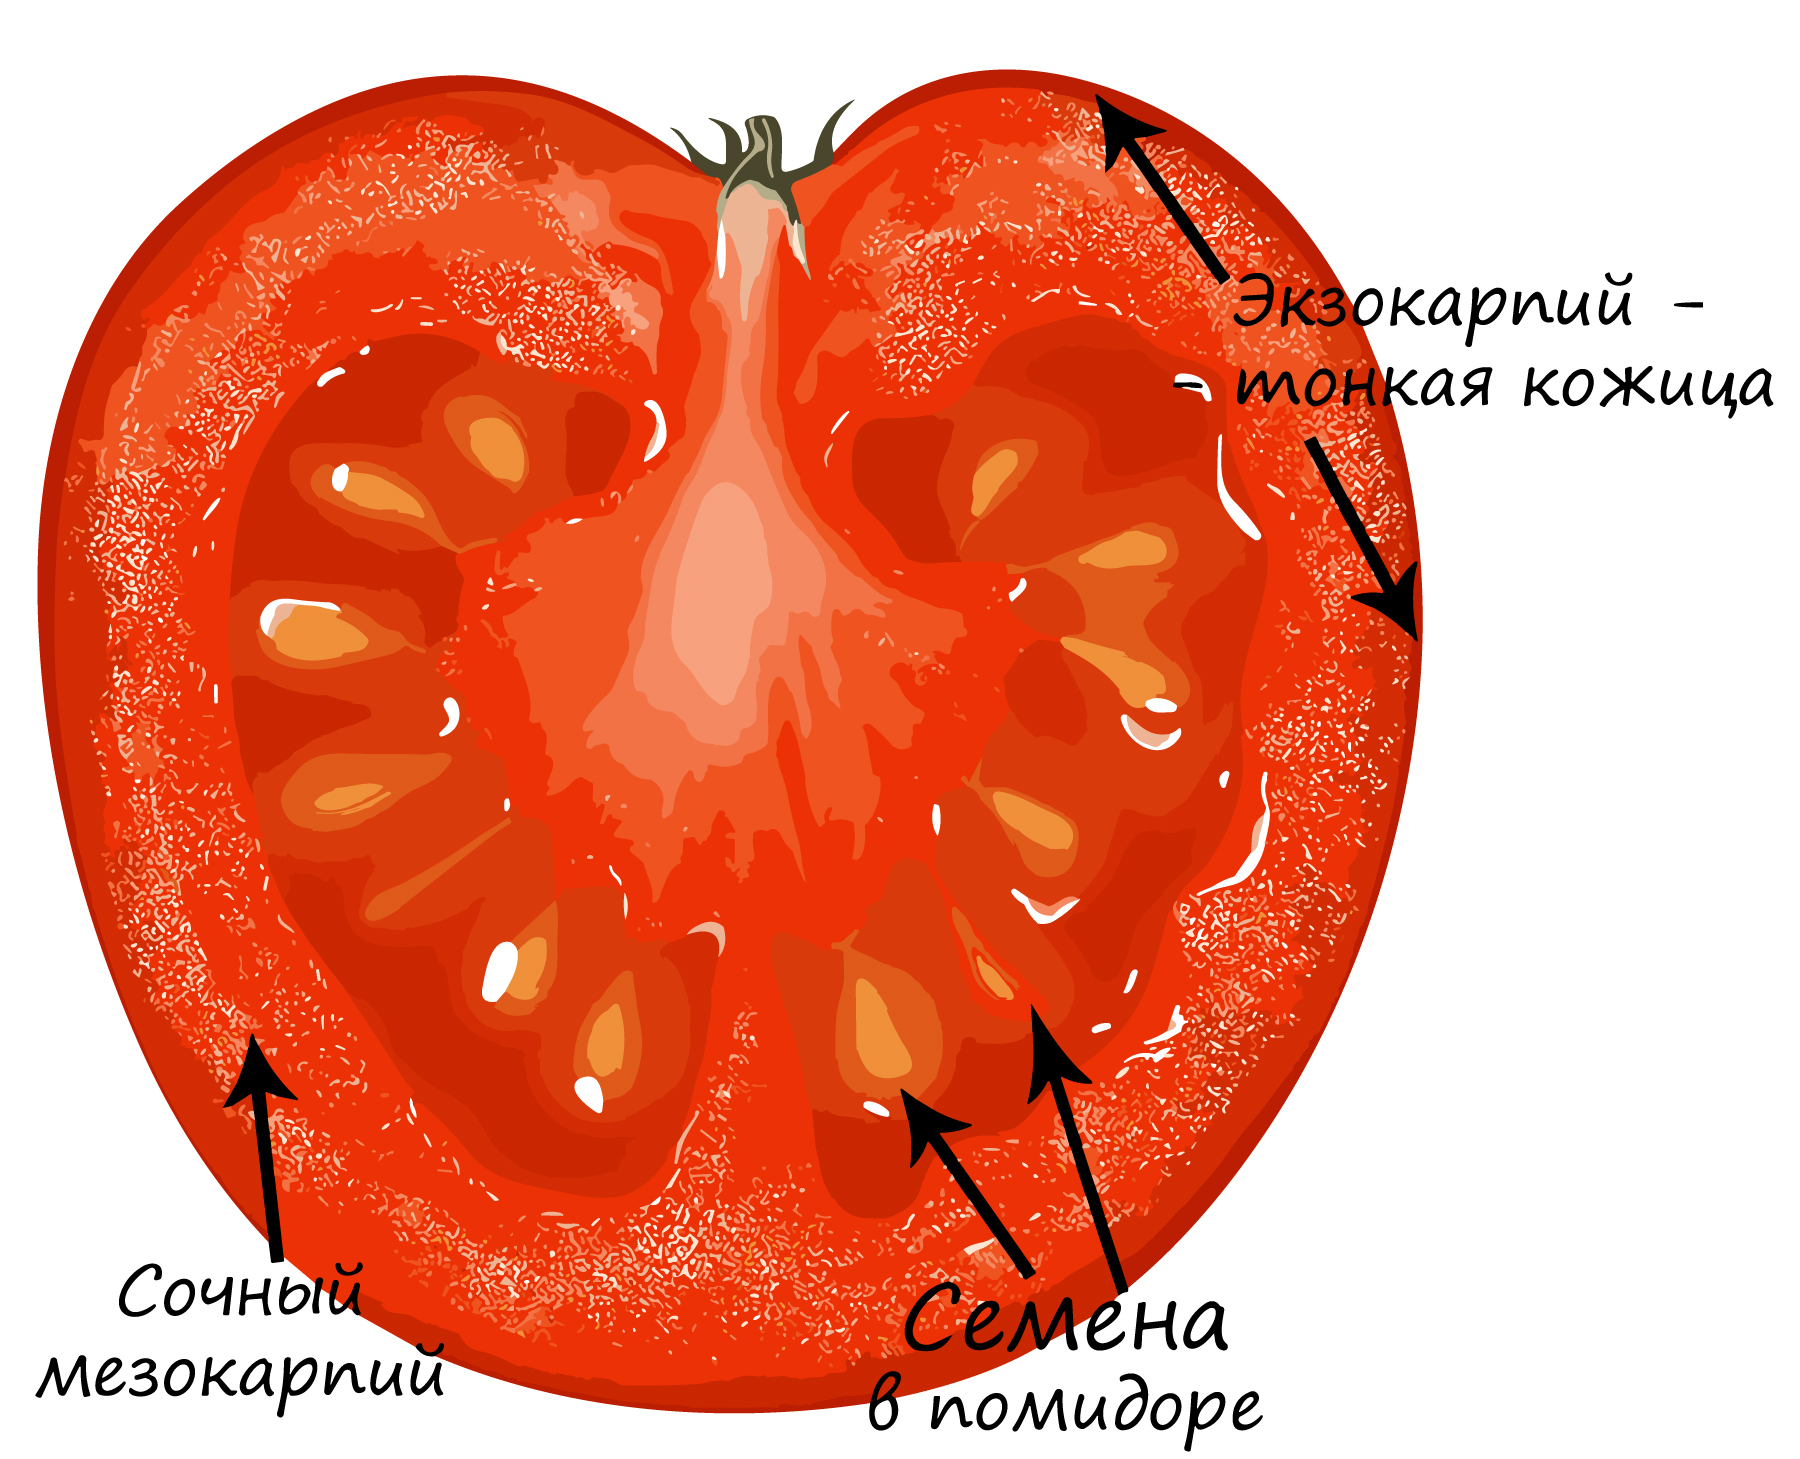 Внутреннее строение семени томата. Строение цветка помидора. Строение плода томата. Фрага плод. Гинецей плода томата.